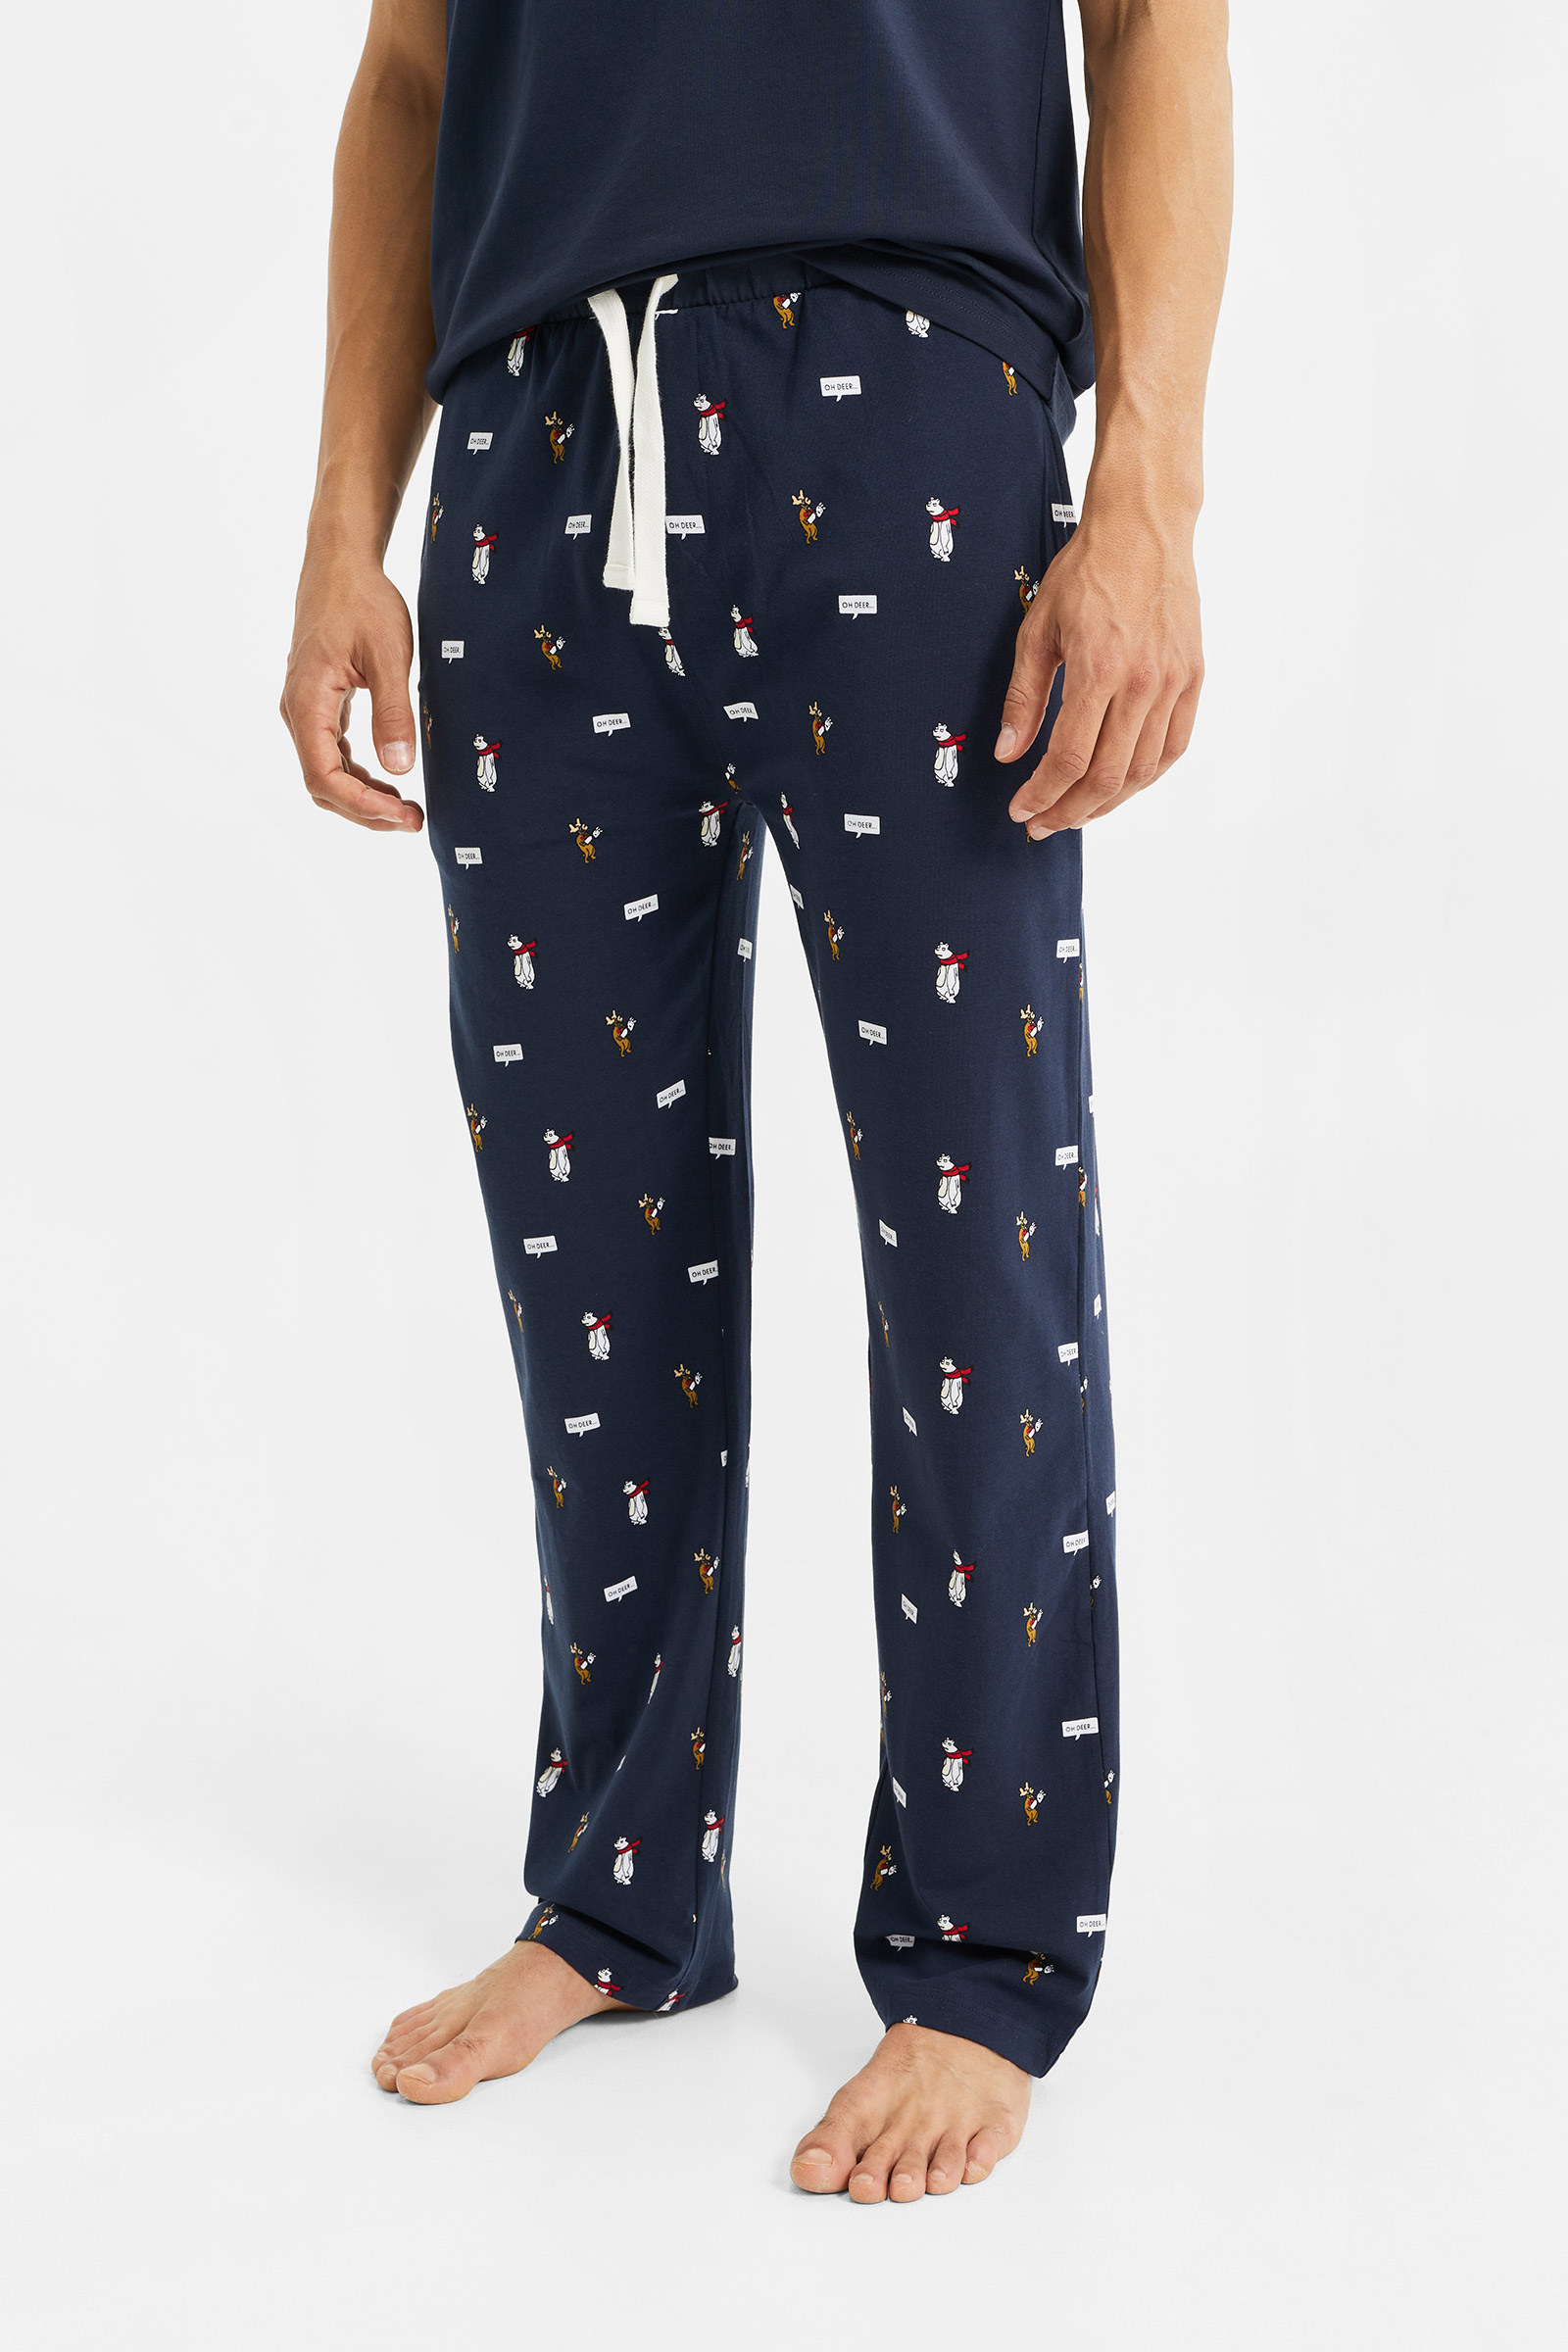 Kleding Herenkleding Pyjamas & Badjassen Pyjamashorts en pyjamabroeken Kerst pyjamabroek voor heren 